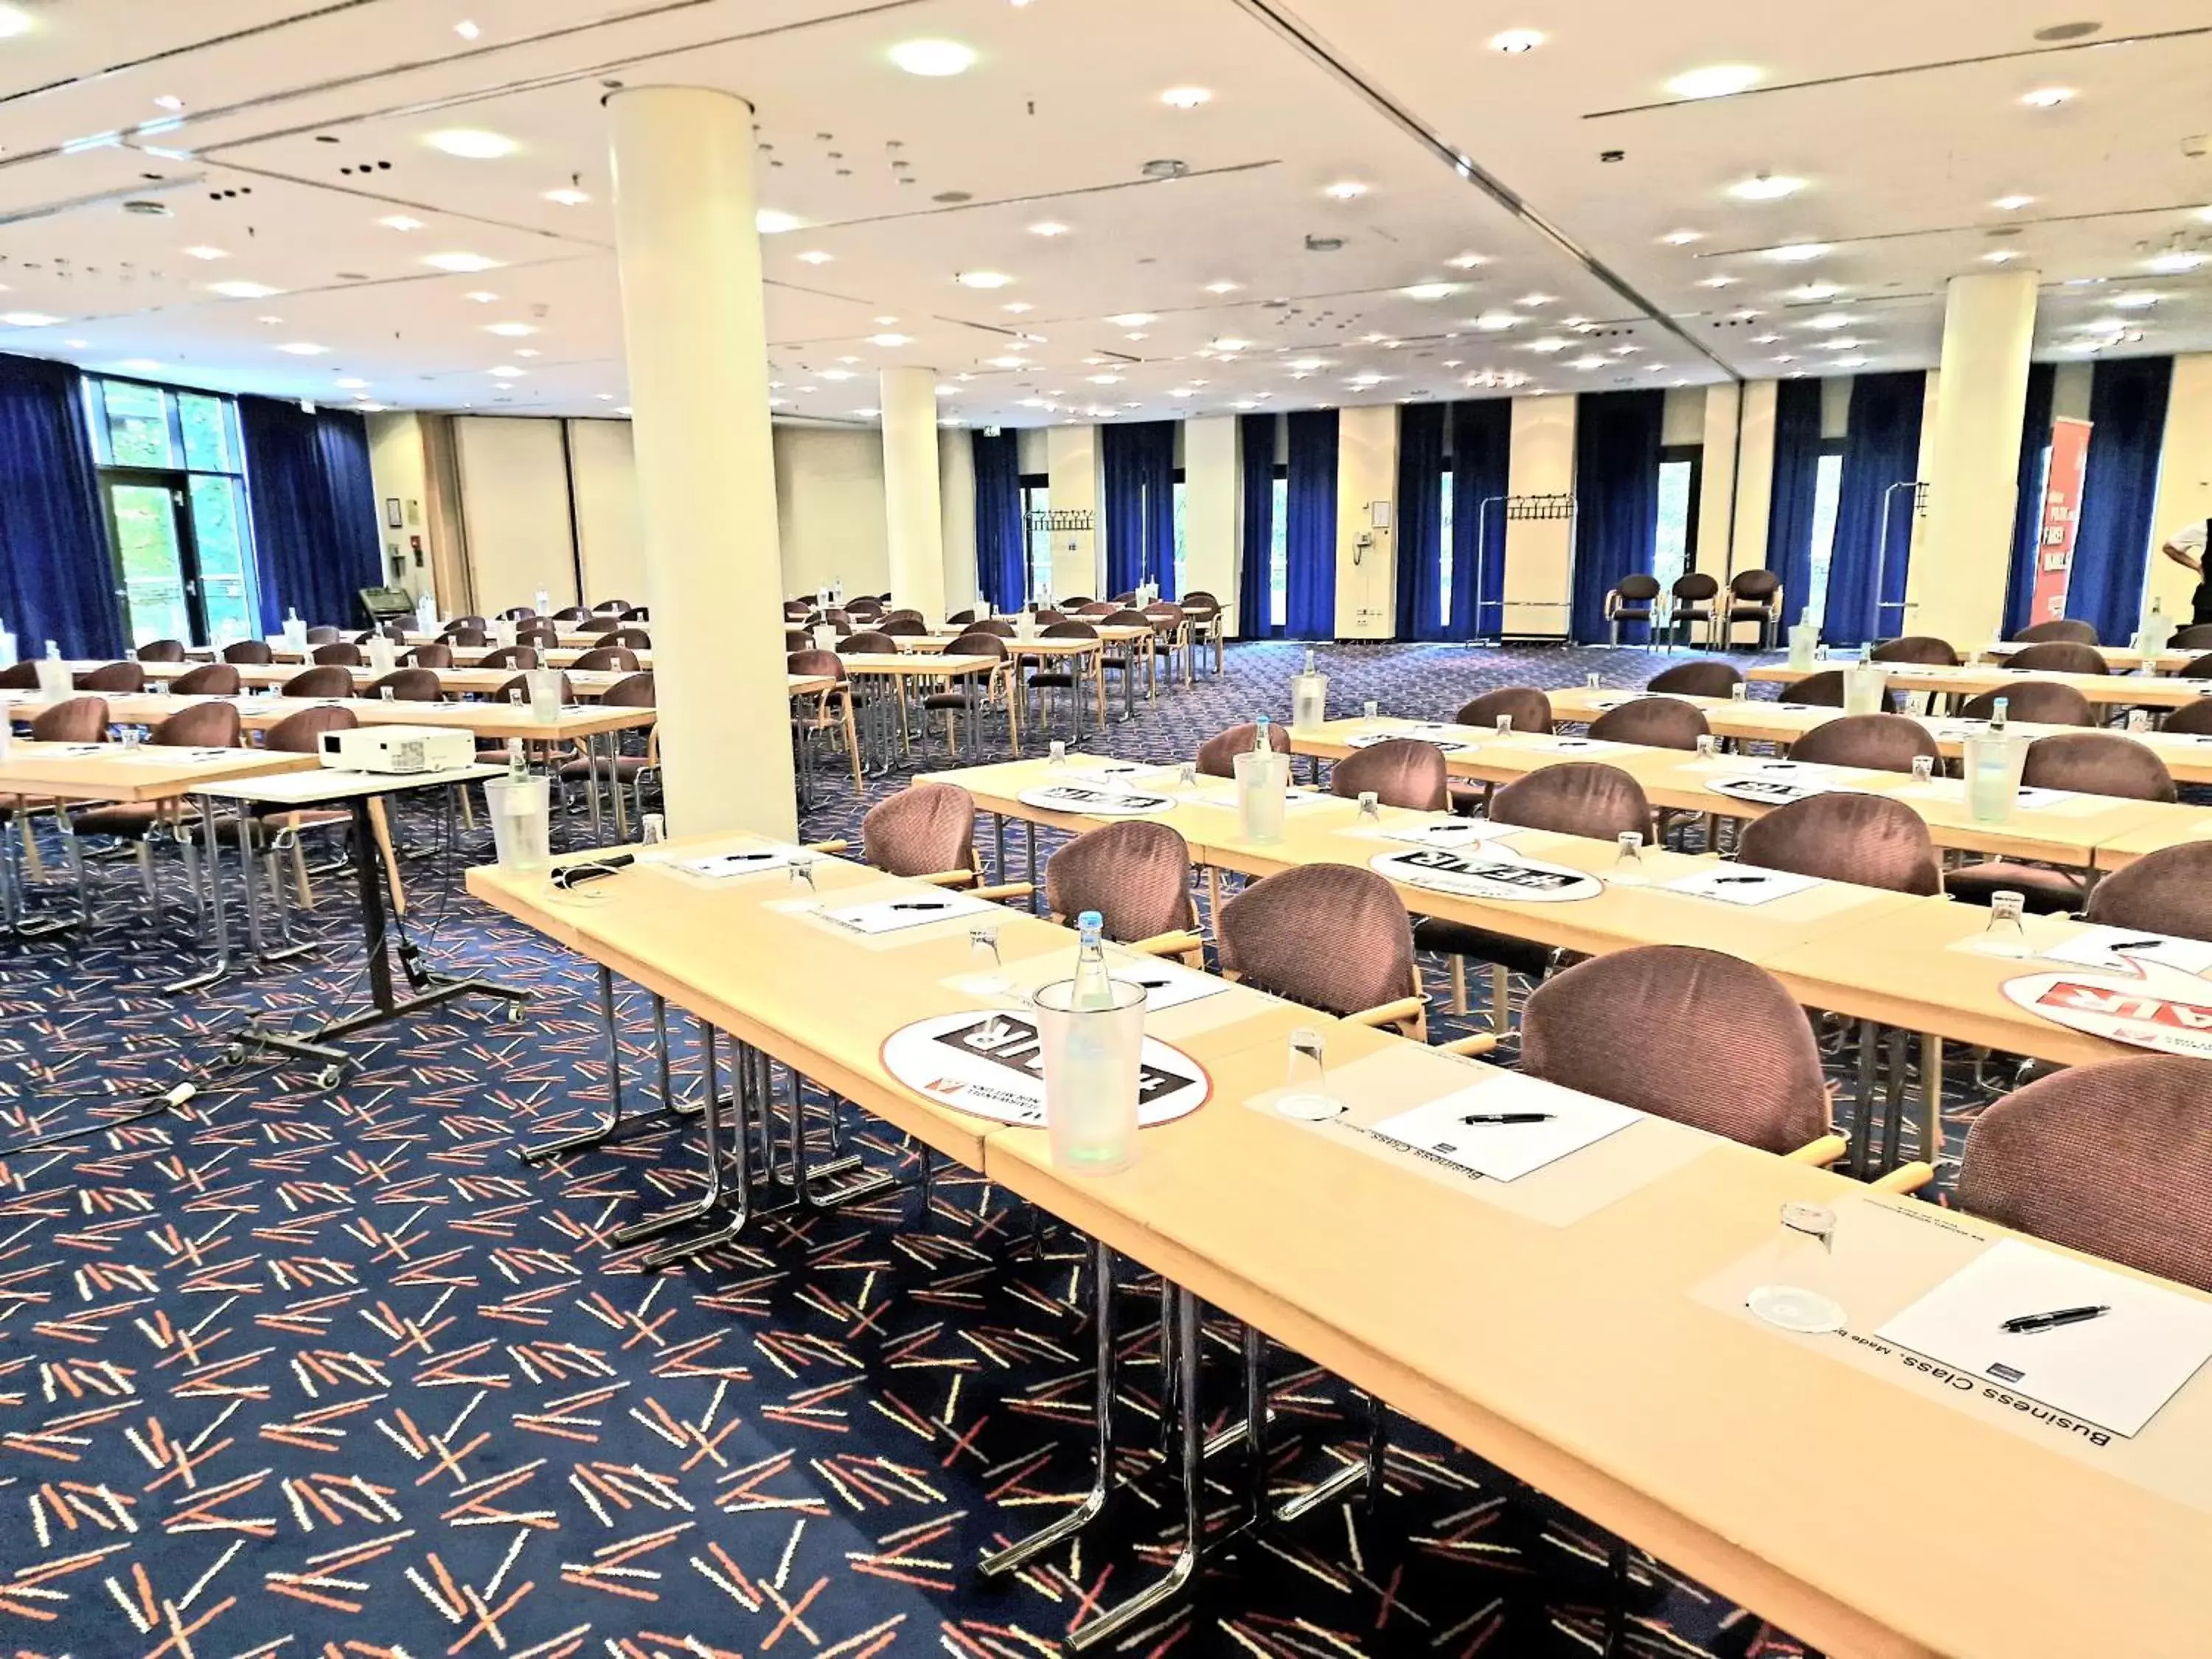 Meeting/conference room in Dorint Kongresshotel Chemnitz